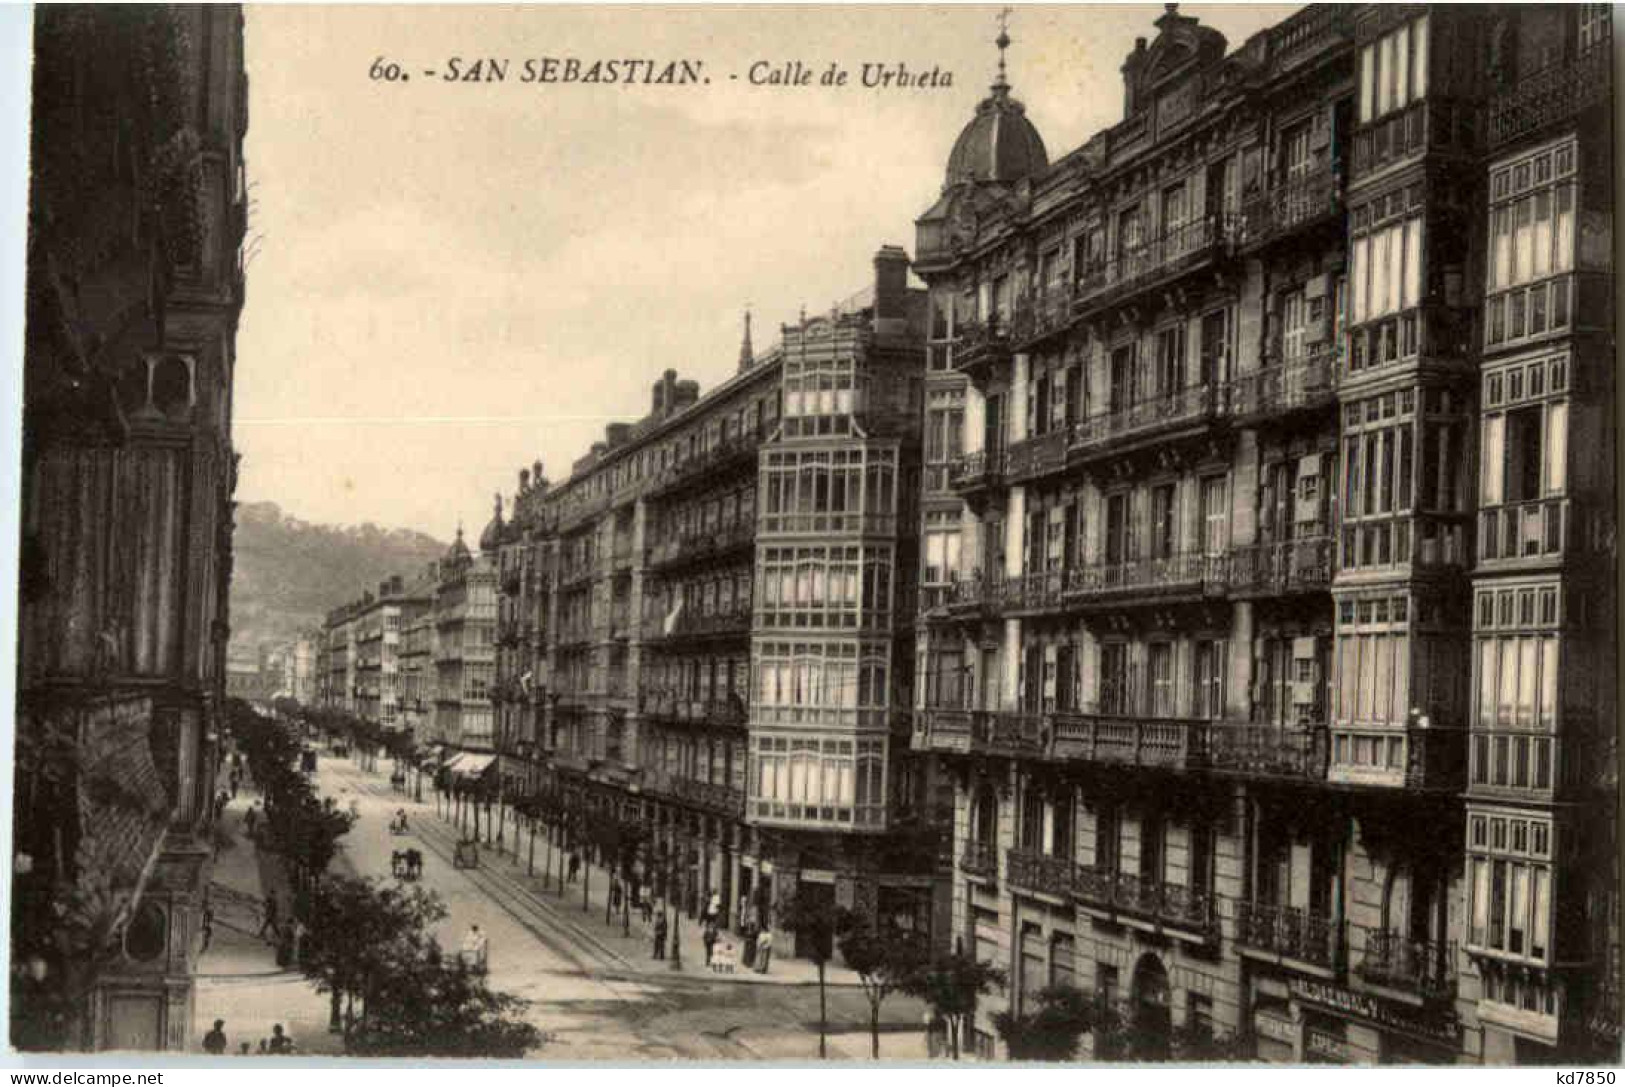 San Sebastian - Calle De Urbieta - Guipúzcoa (San Sebastián)